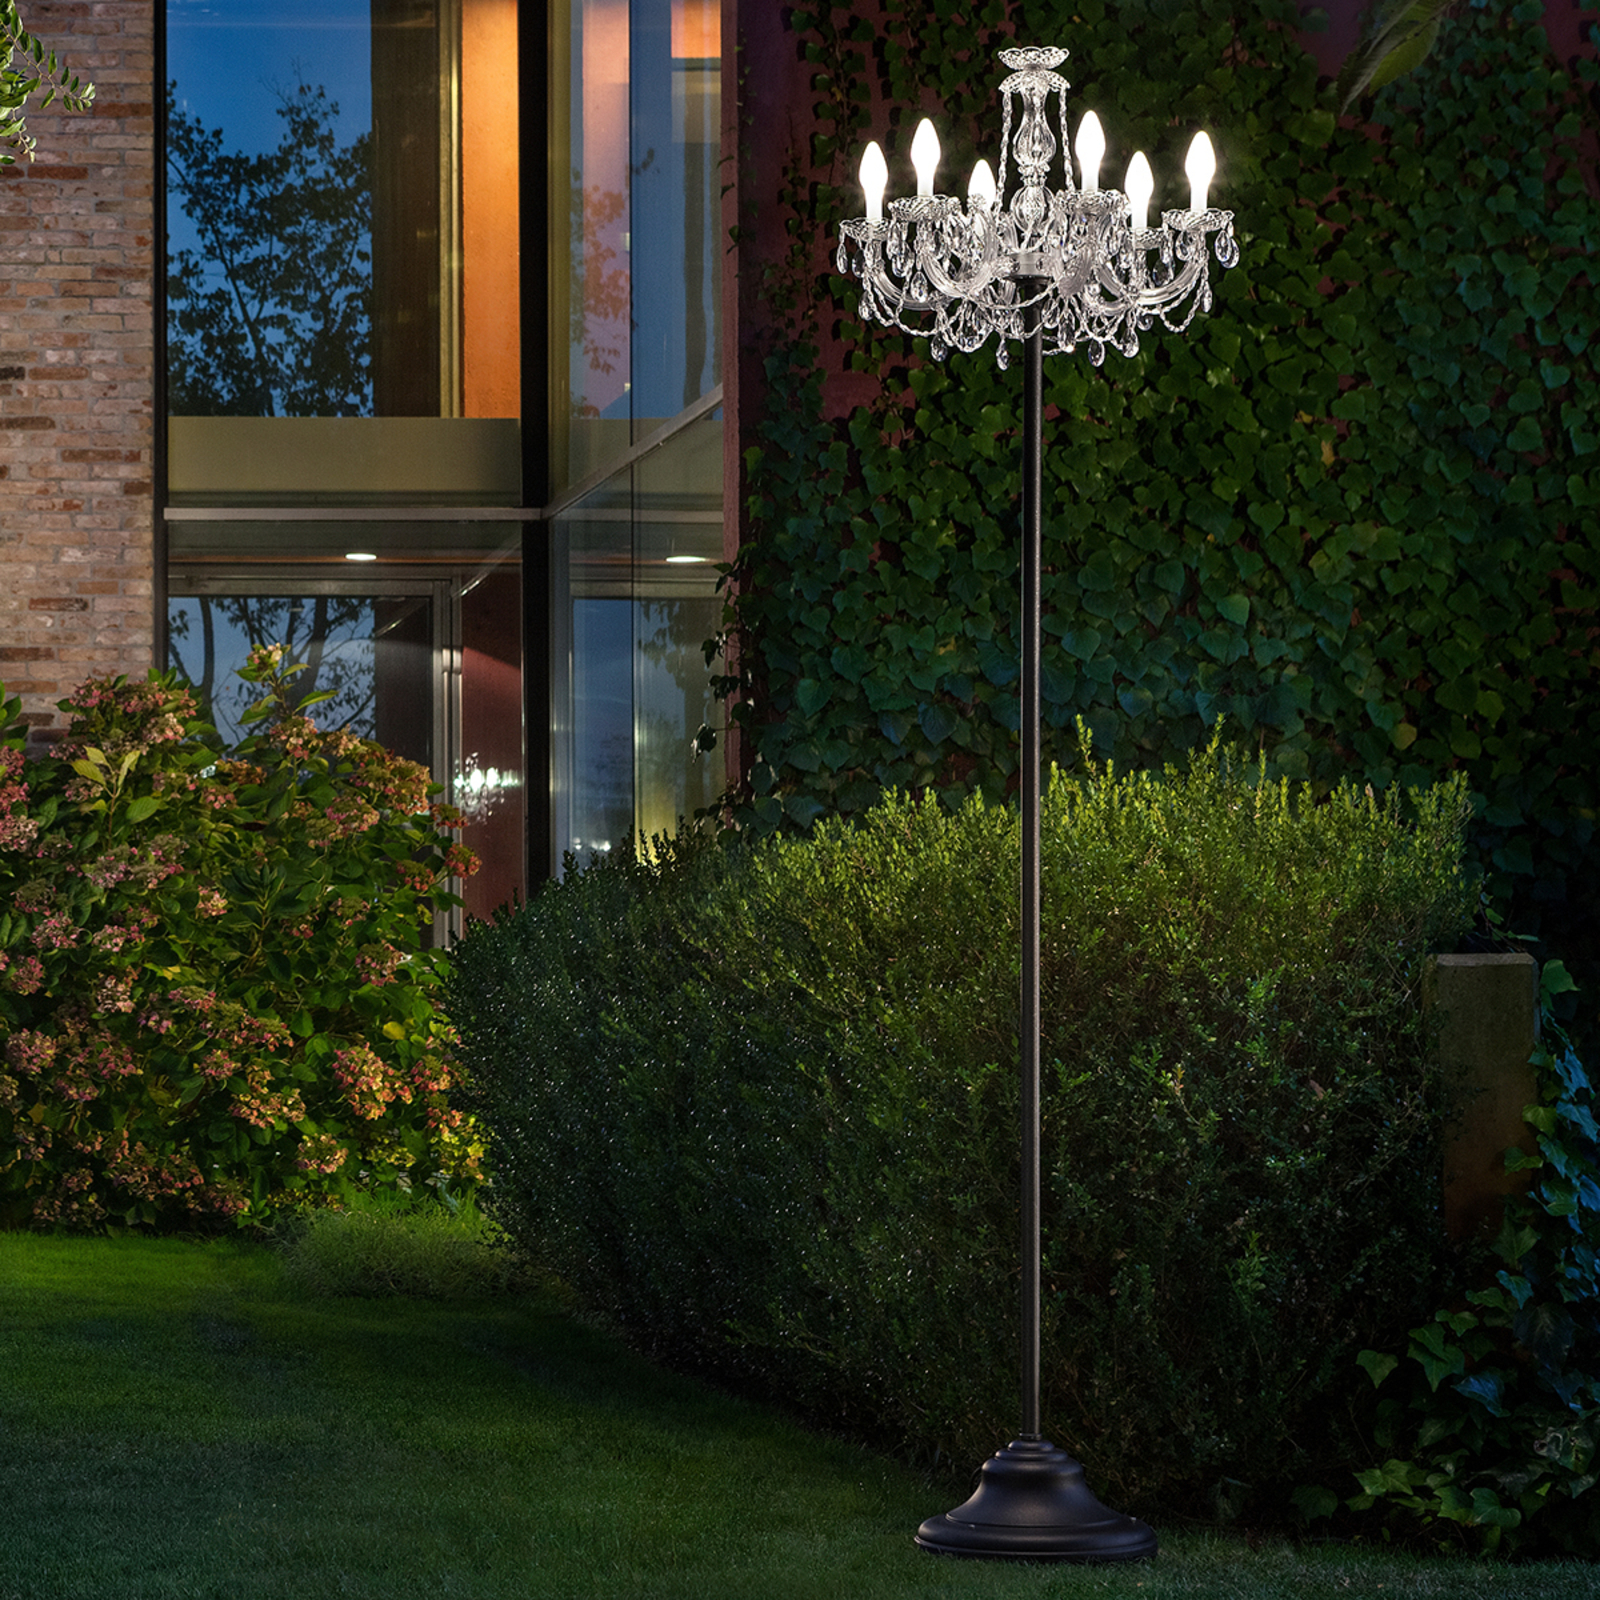 Drylight RGBW outdoor floor lamp - app-controlled